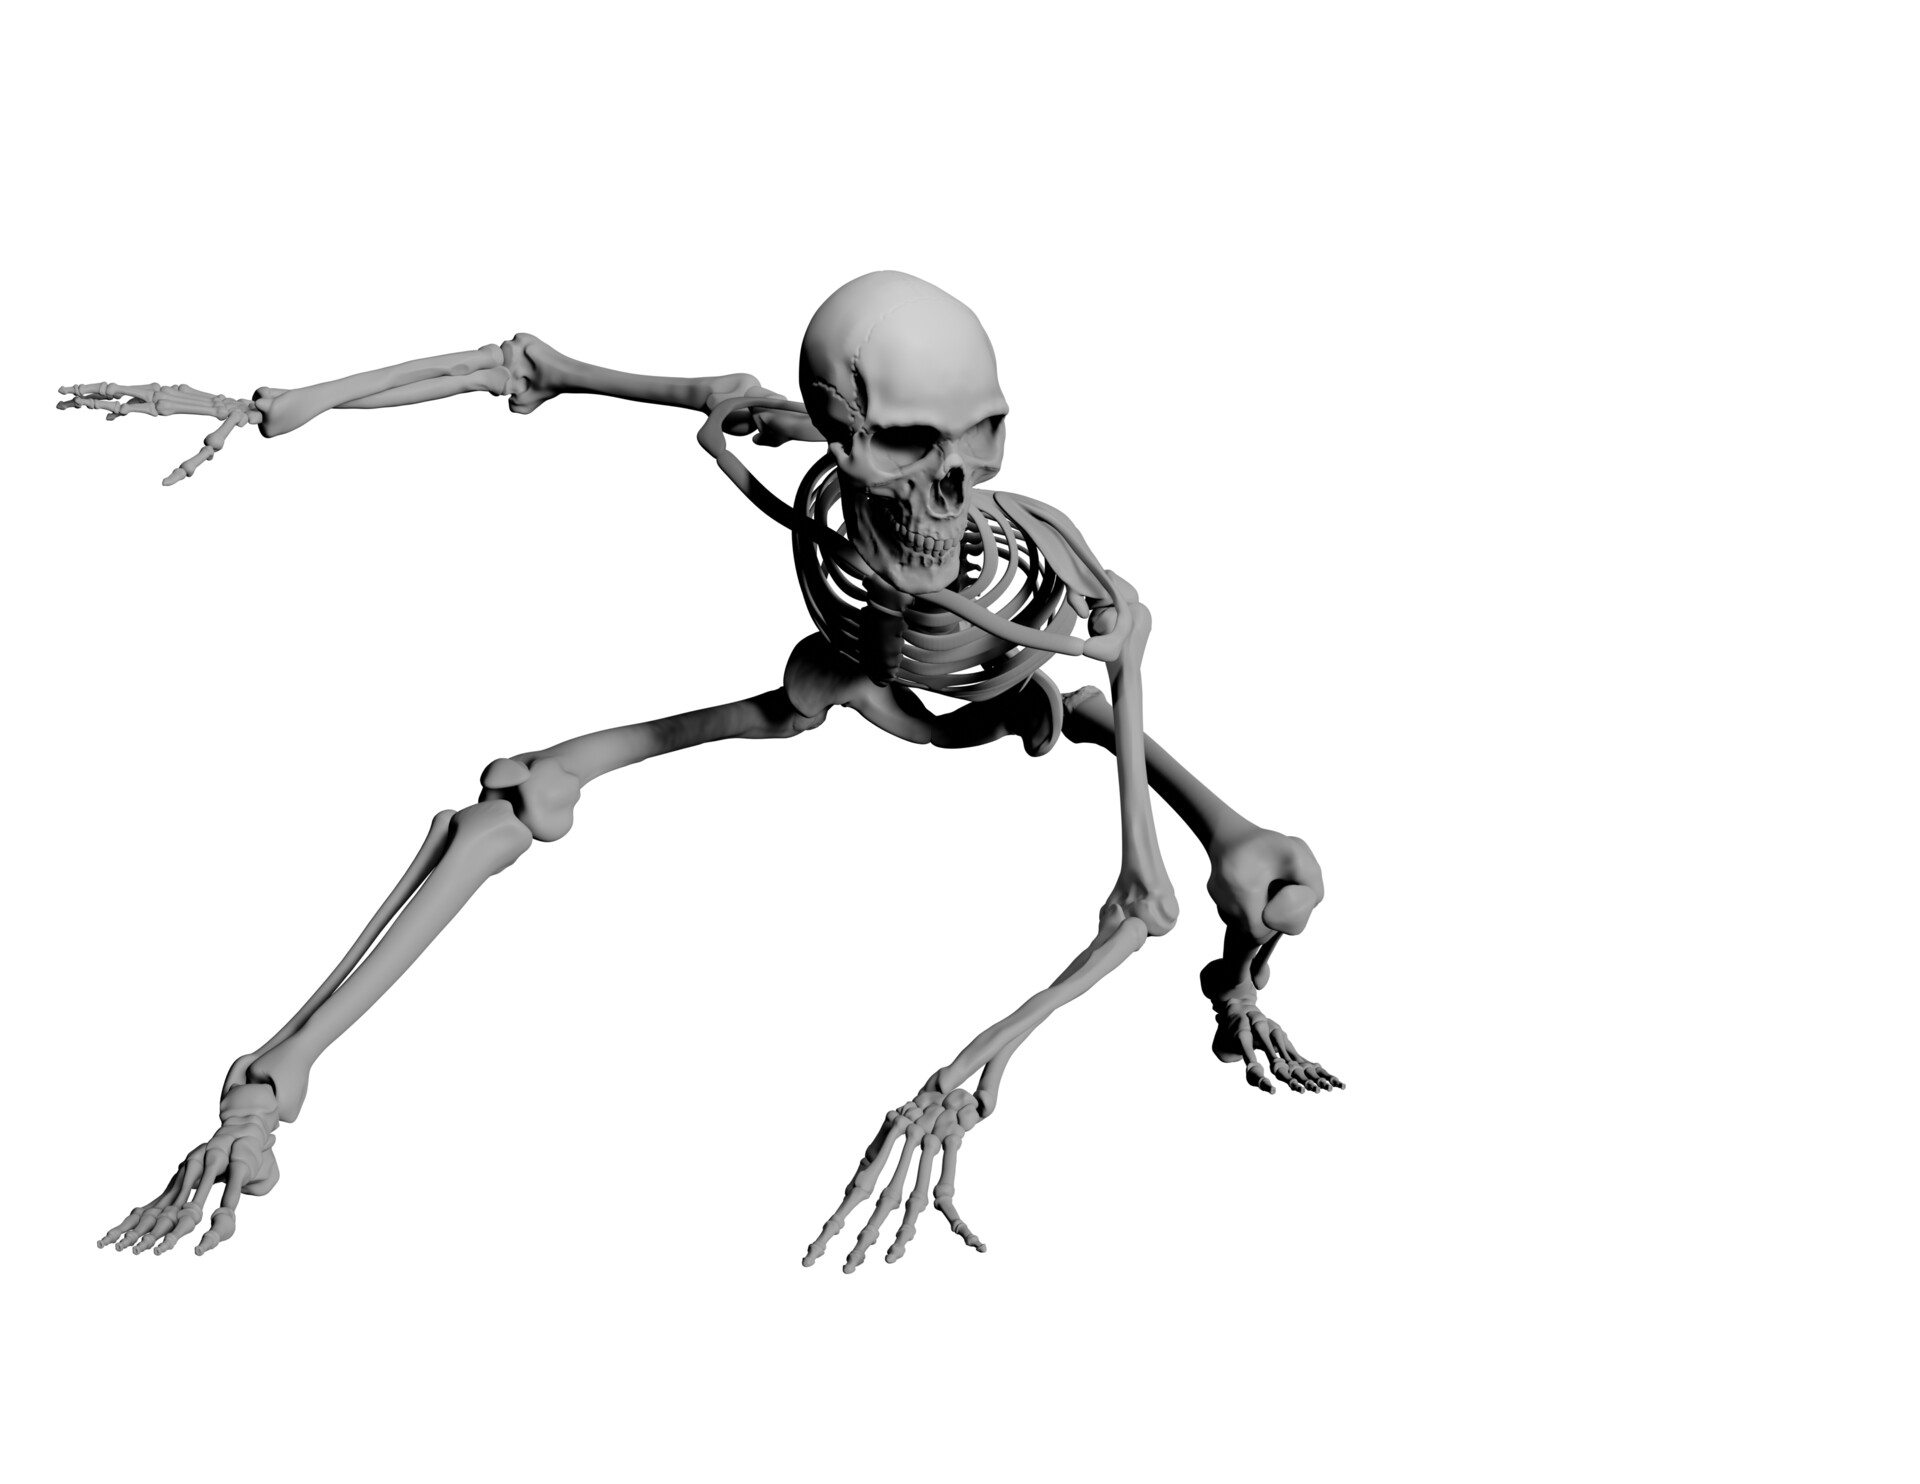 The Skeletal Anatomy of Tom Holland's Spiderman